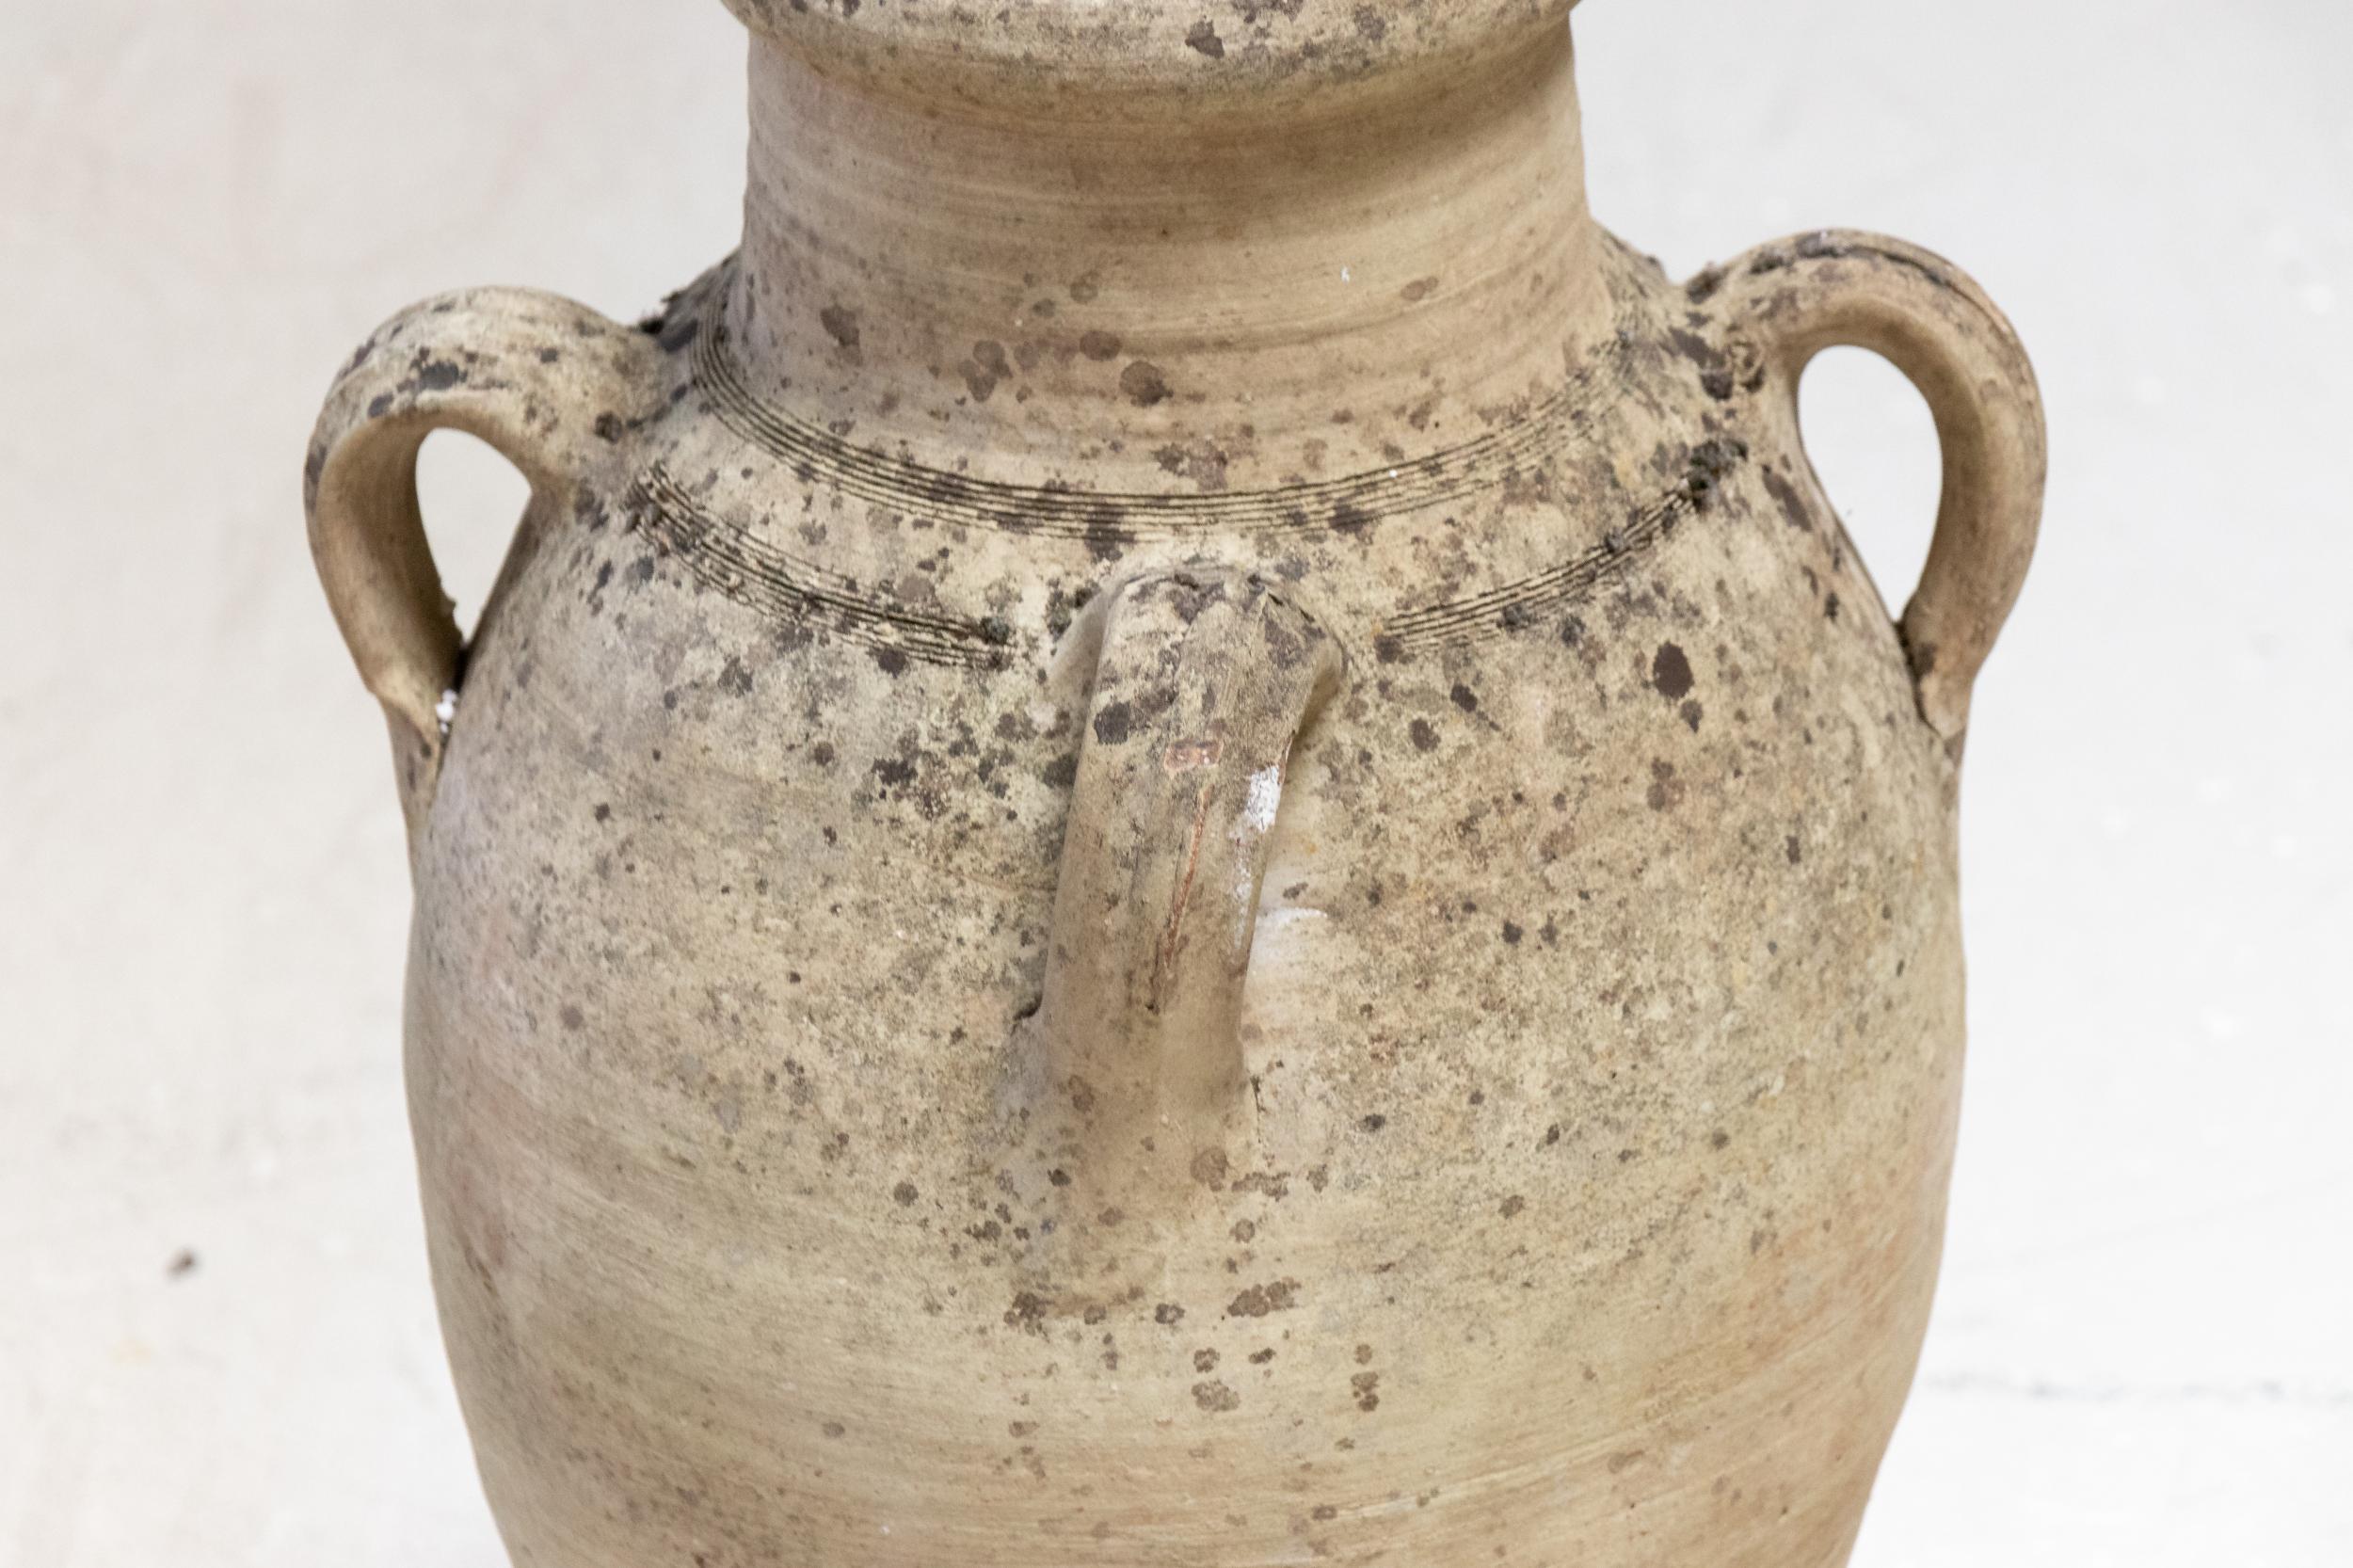 ceramic pot with handles